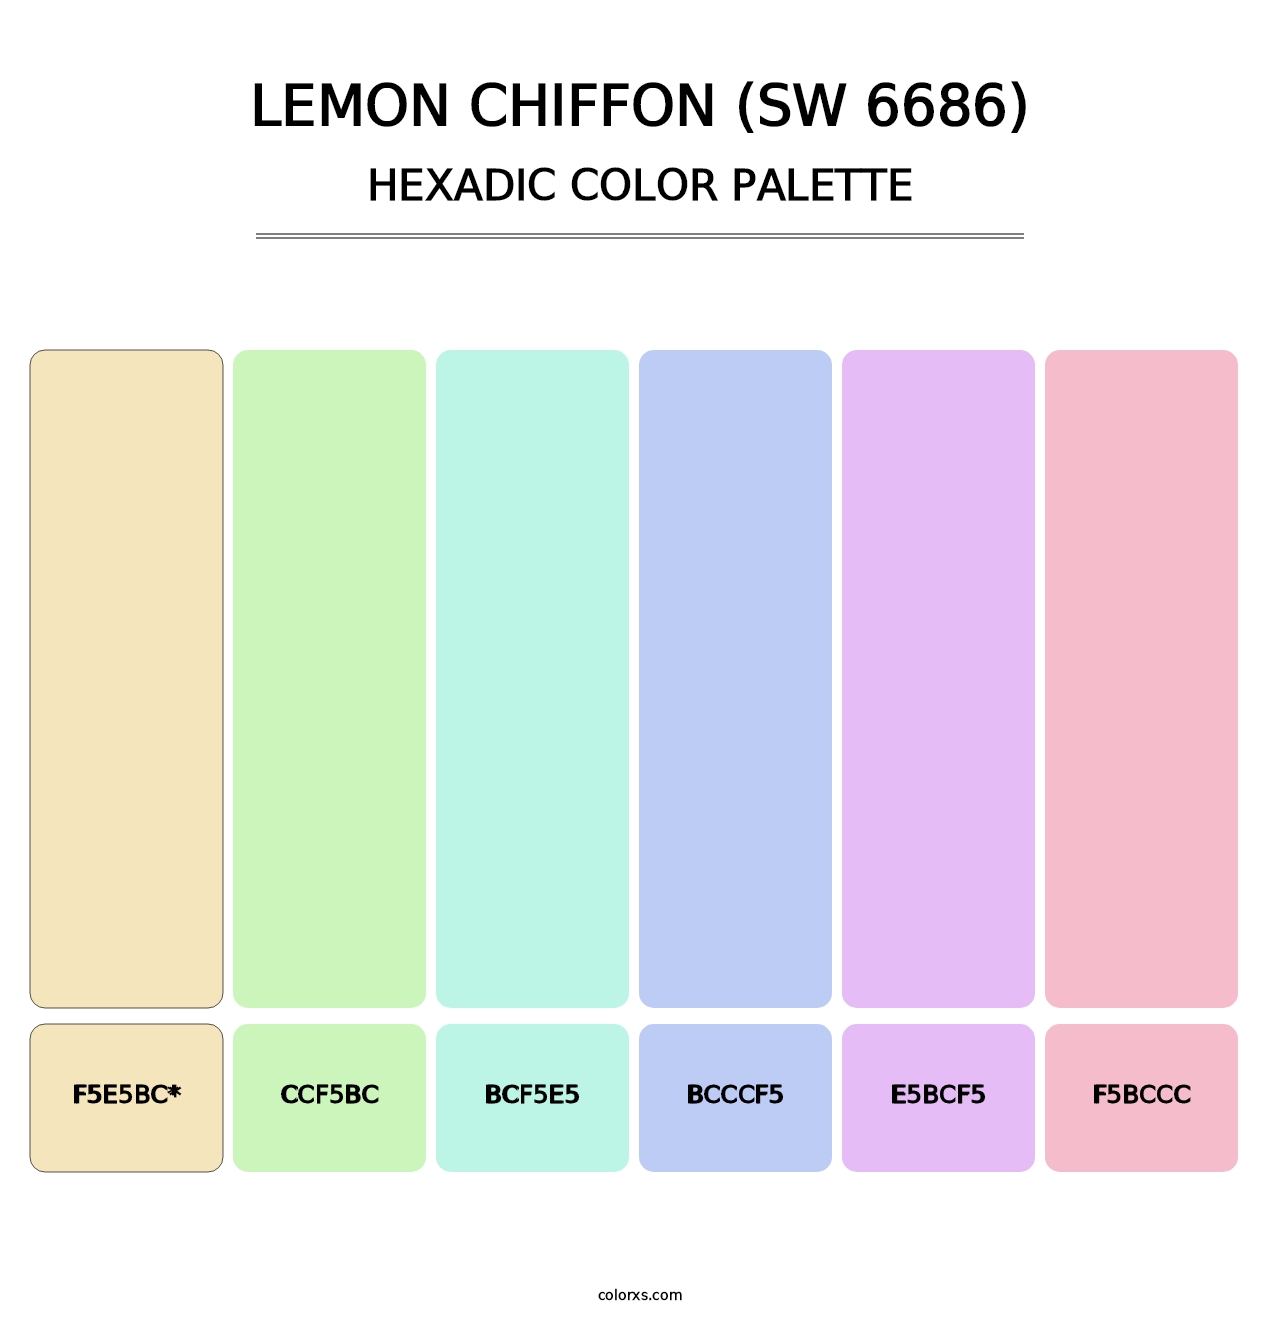 Lemon Chiffon (SW 6686) - Hexadic Color Palette